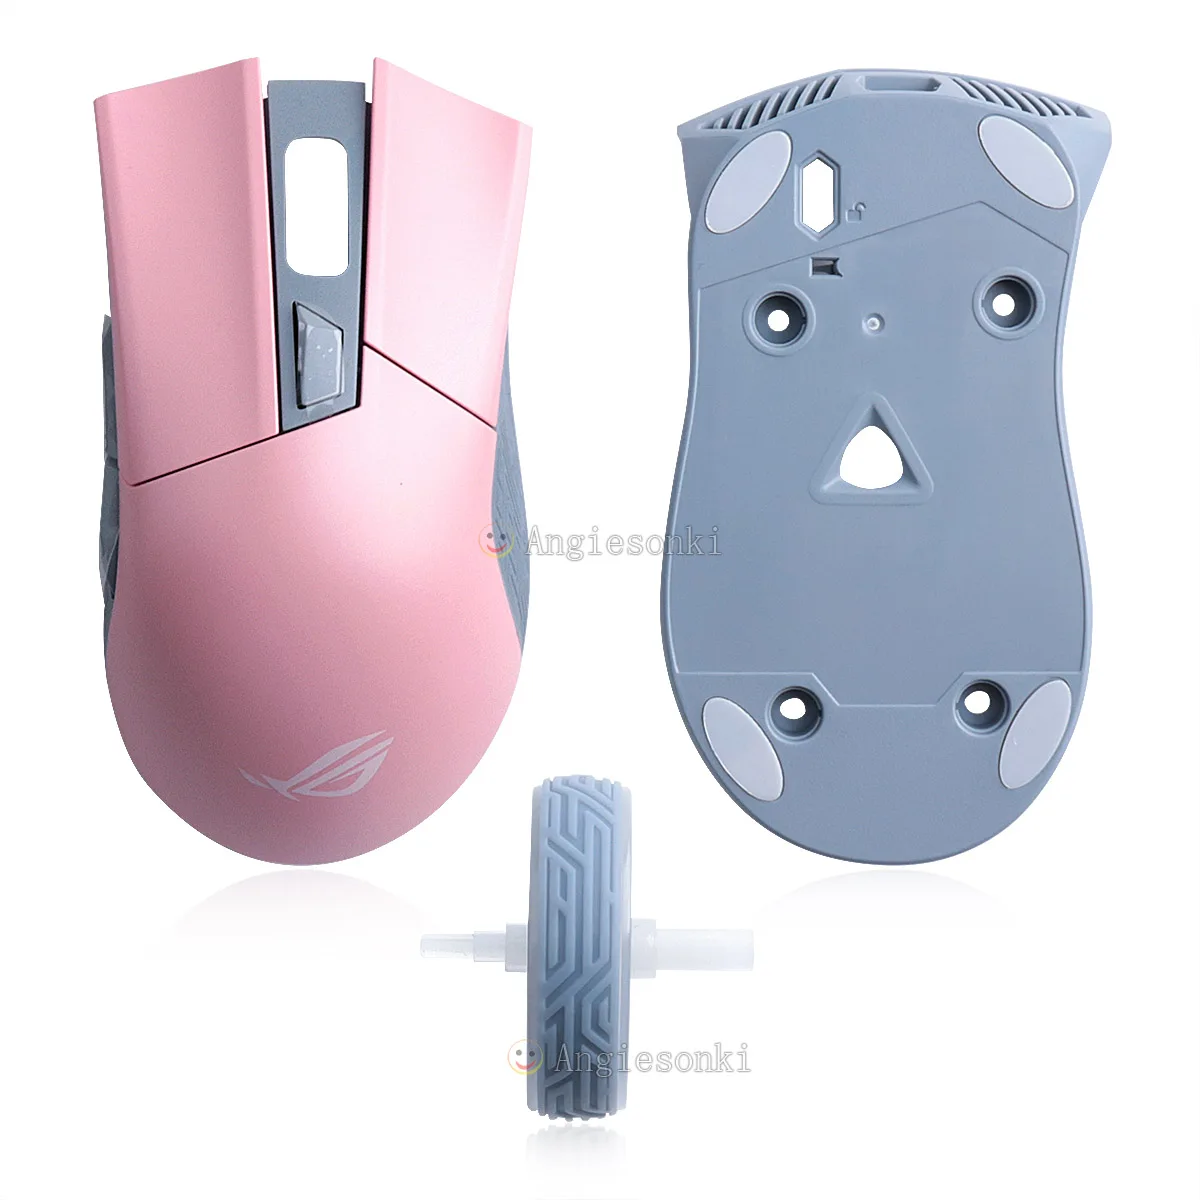 Carcasa superior/cubierta/carcasa exterior/rueda para ASUS ROG Gladius II Origin Pink Mouse